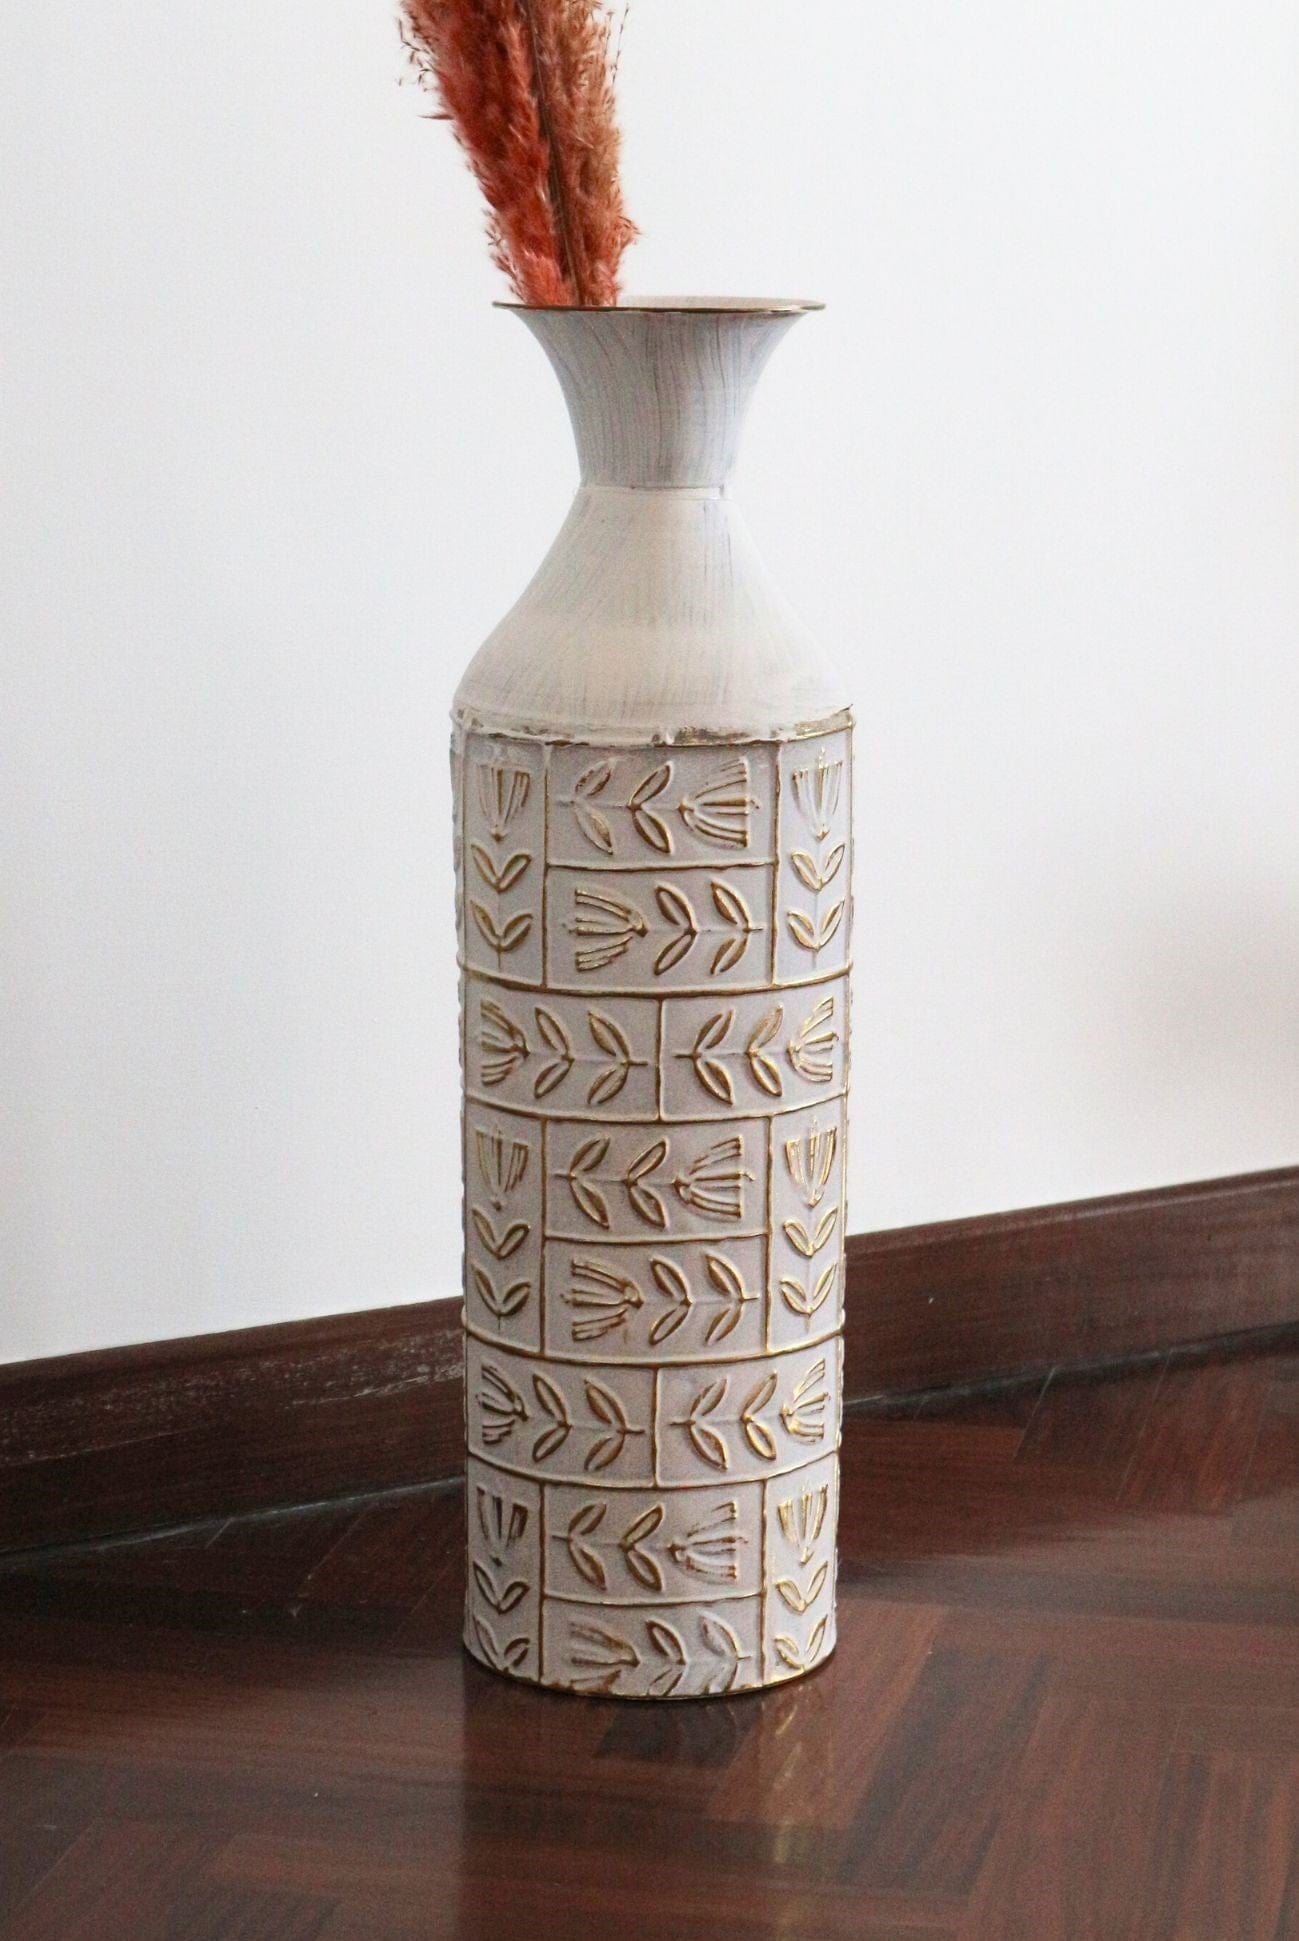 Item International Viha Viha - Vaso grande in metallo in stile boho | Item International